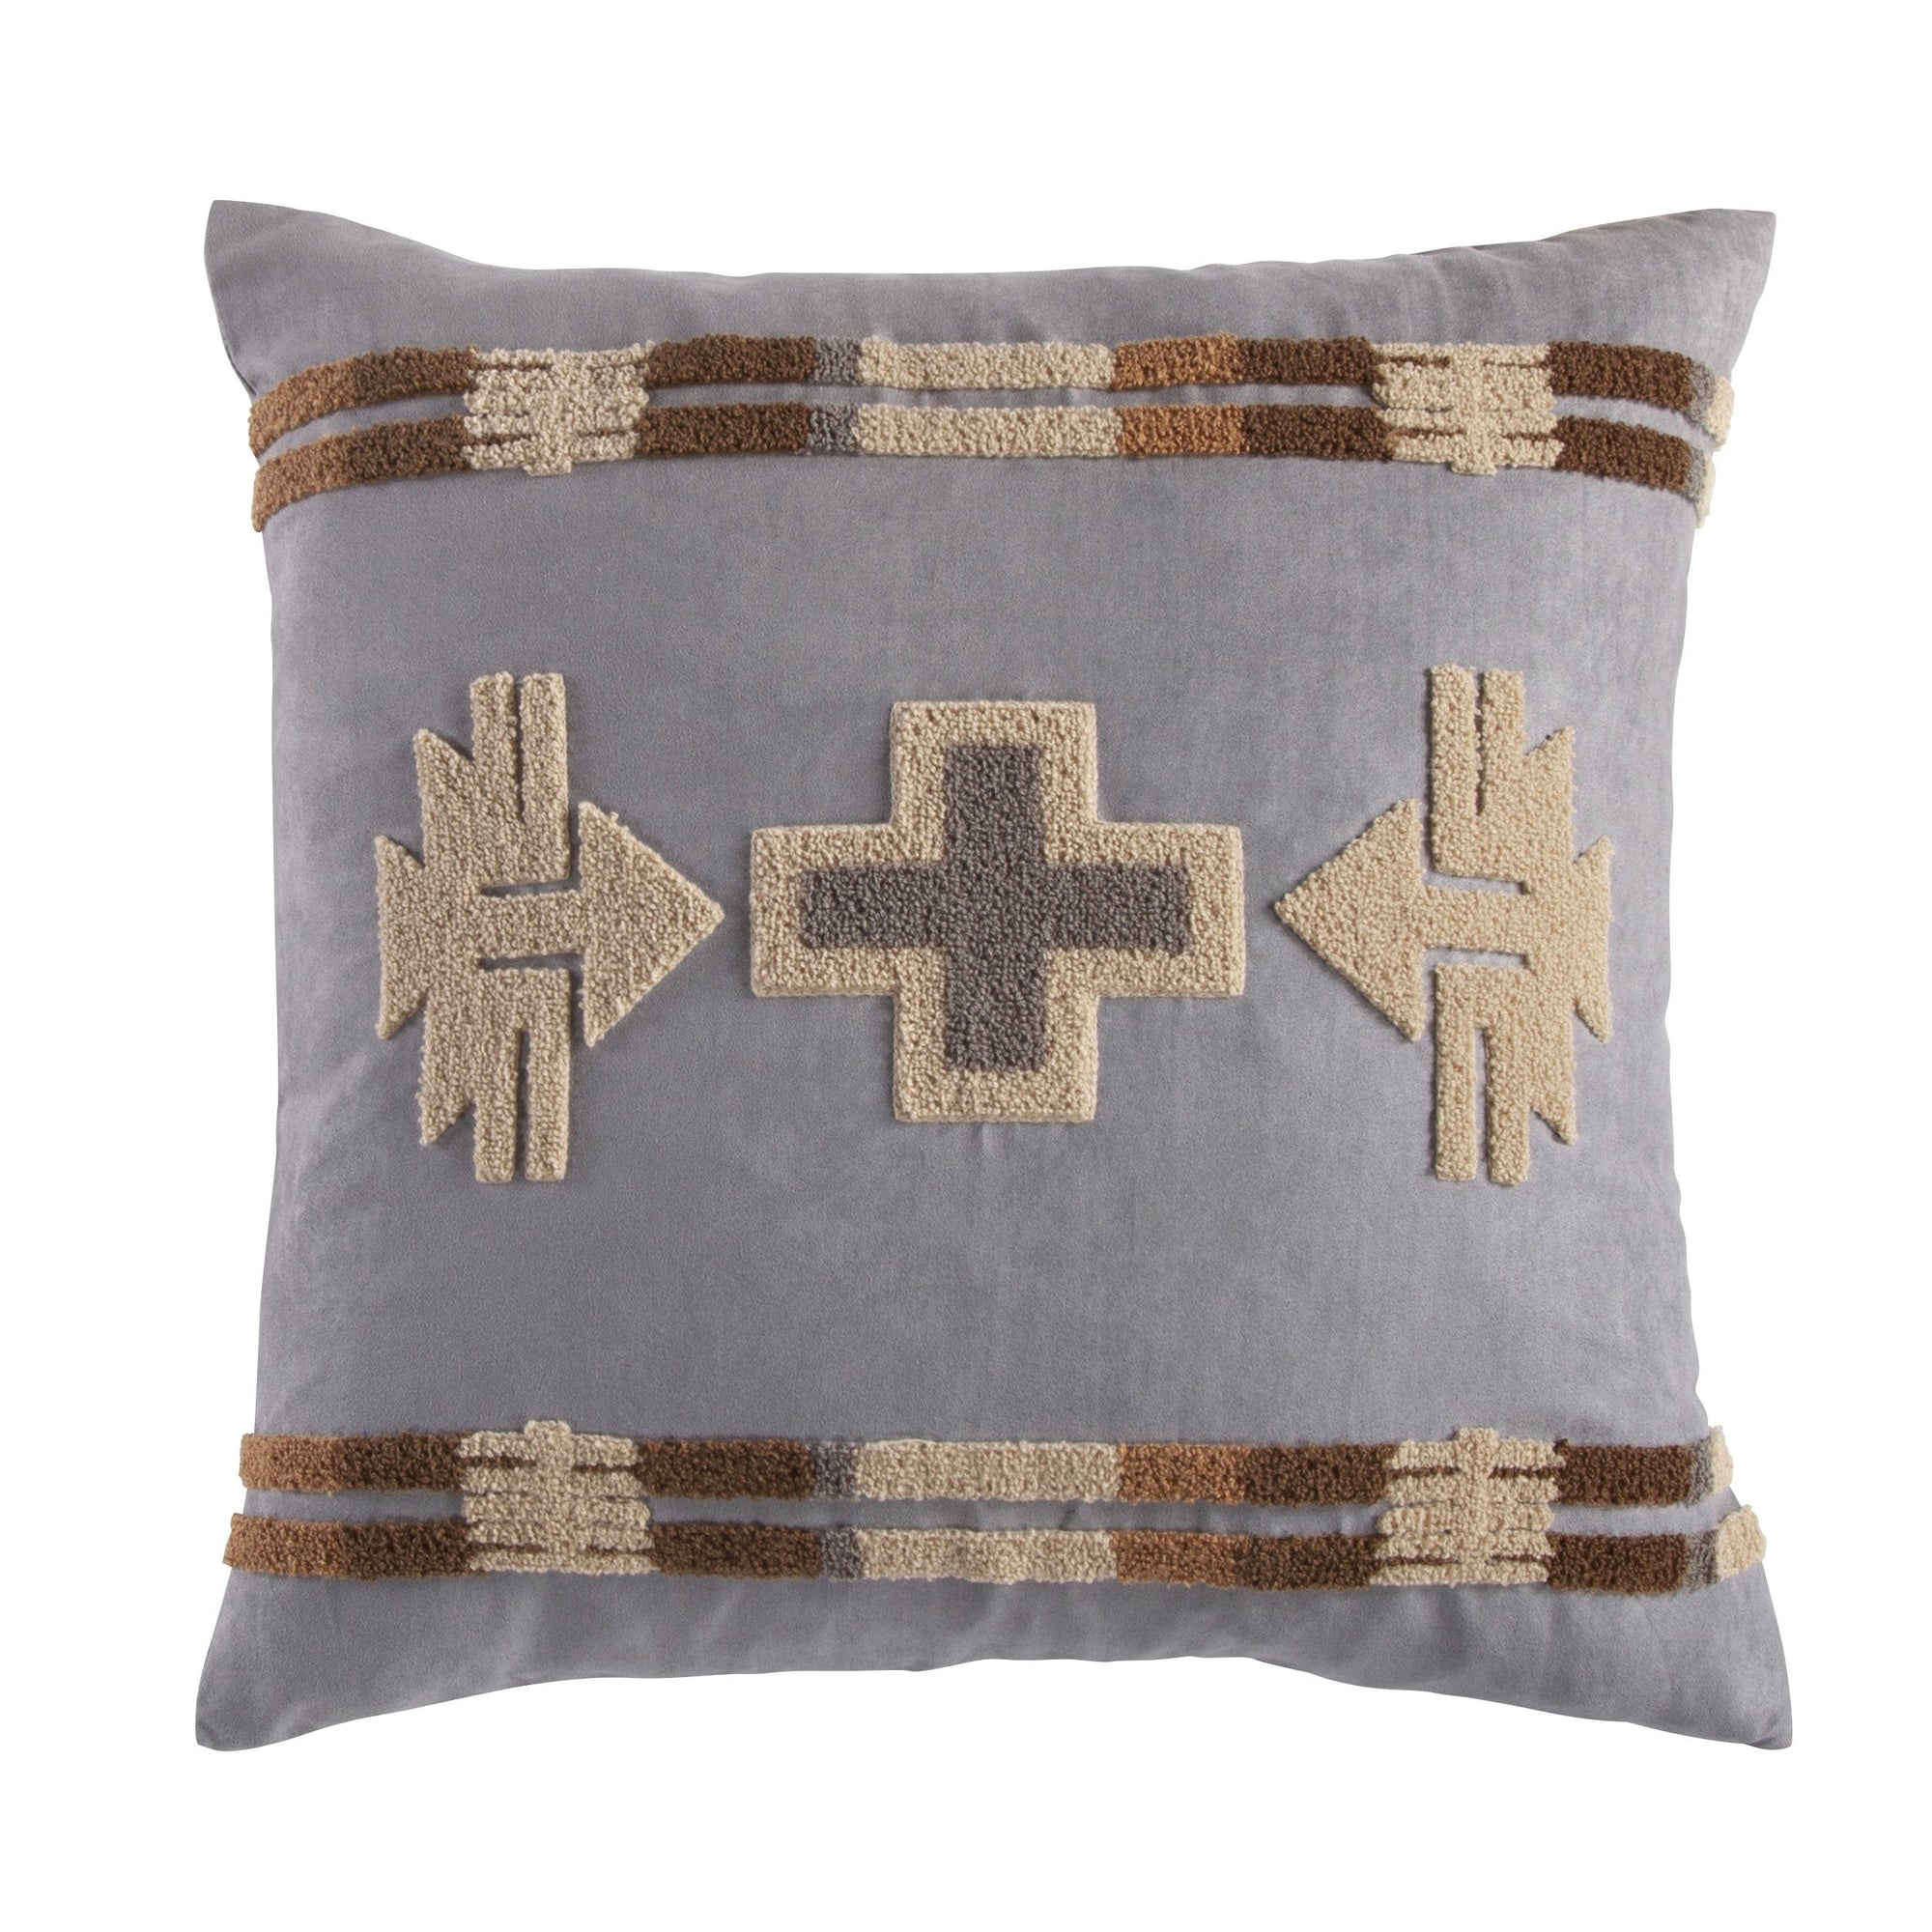 Southwest Crewel Embroidery Pillow, 20x20 Pillow